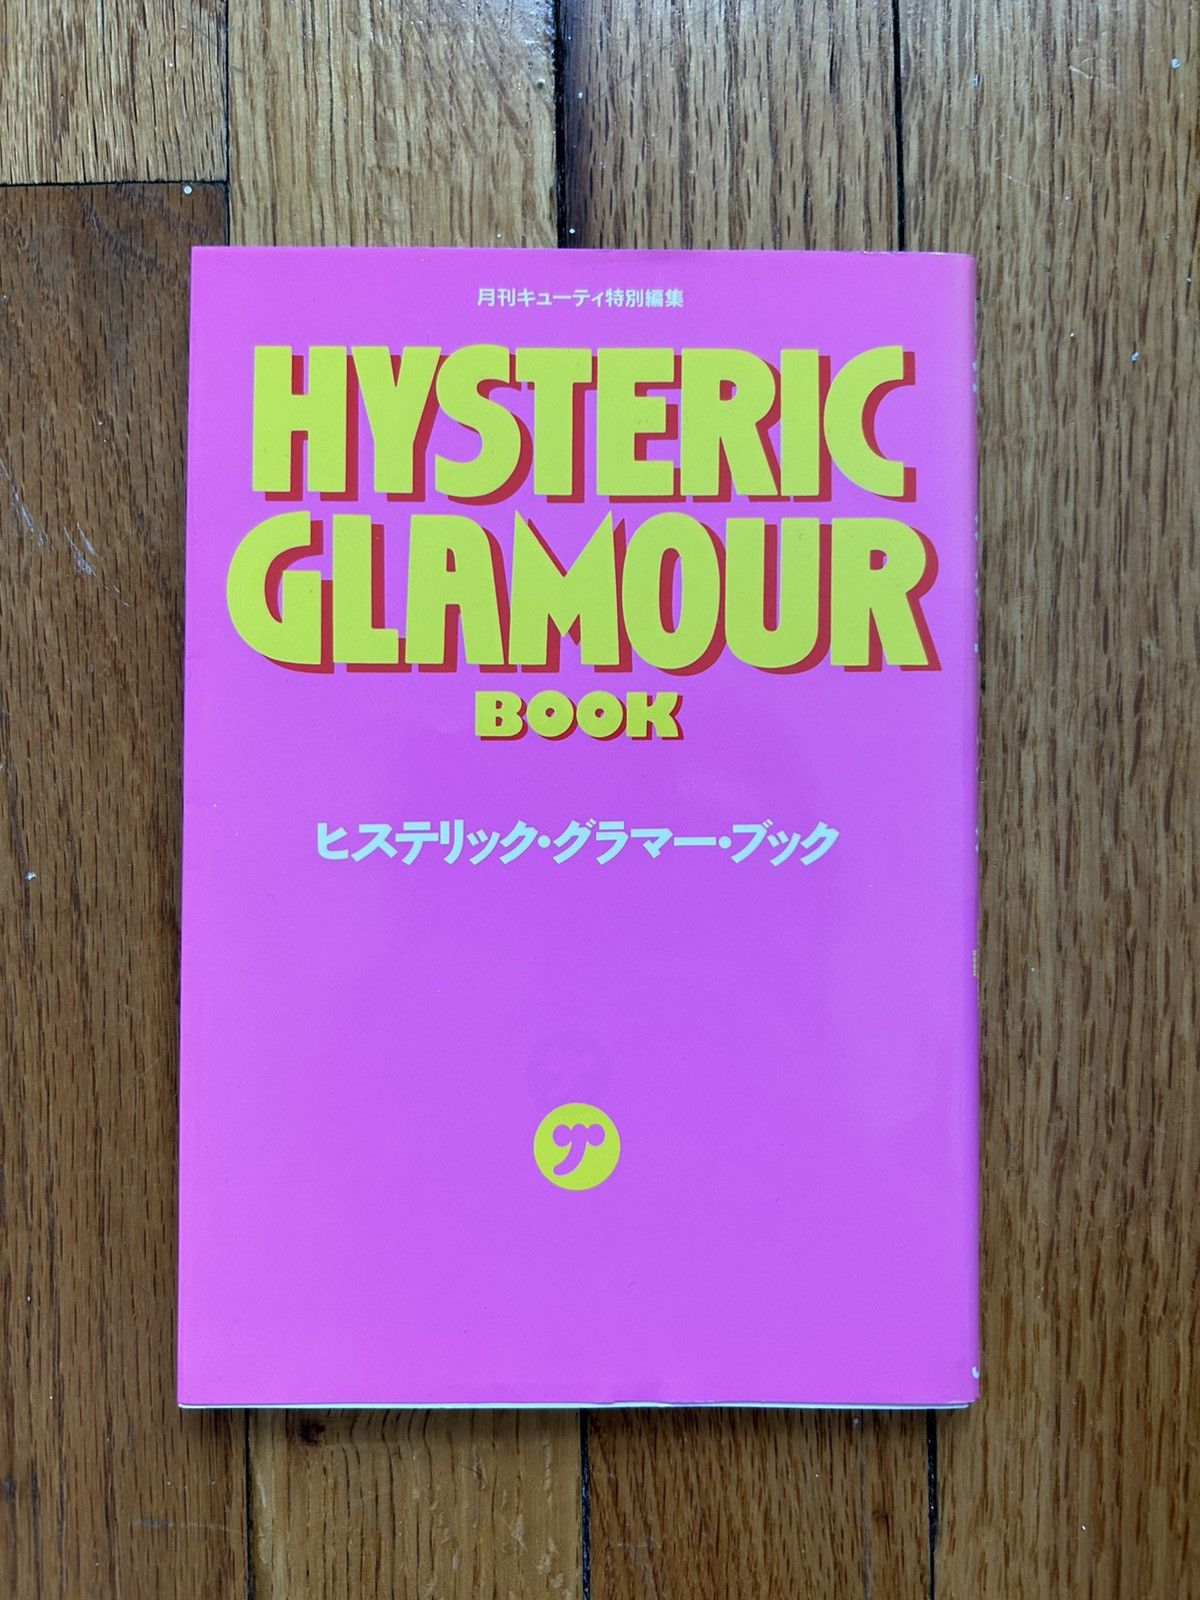 Hysteric Glamour Hysteric Glamour Book by Nobuhiko Kitamura 1990